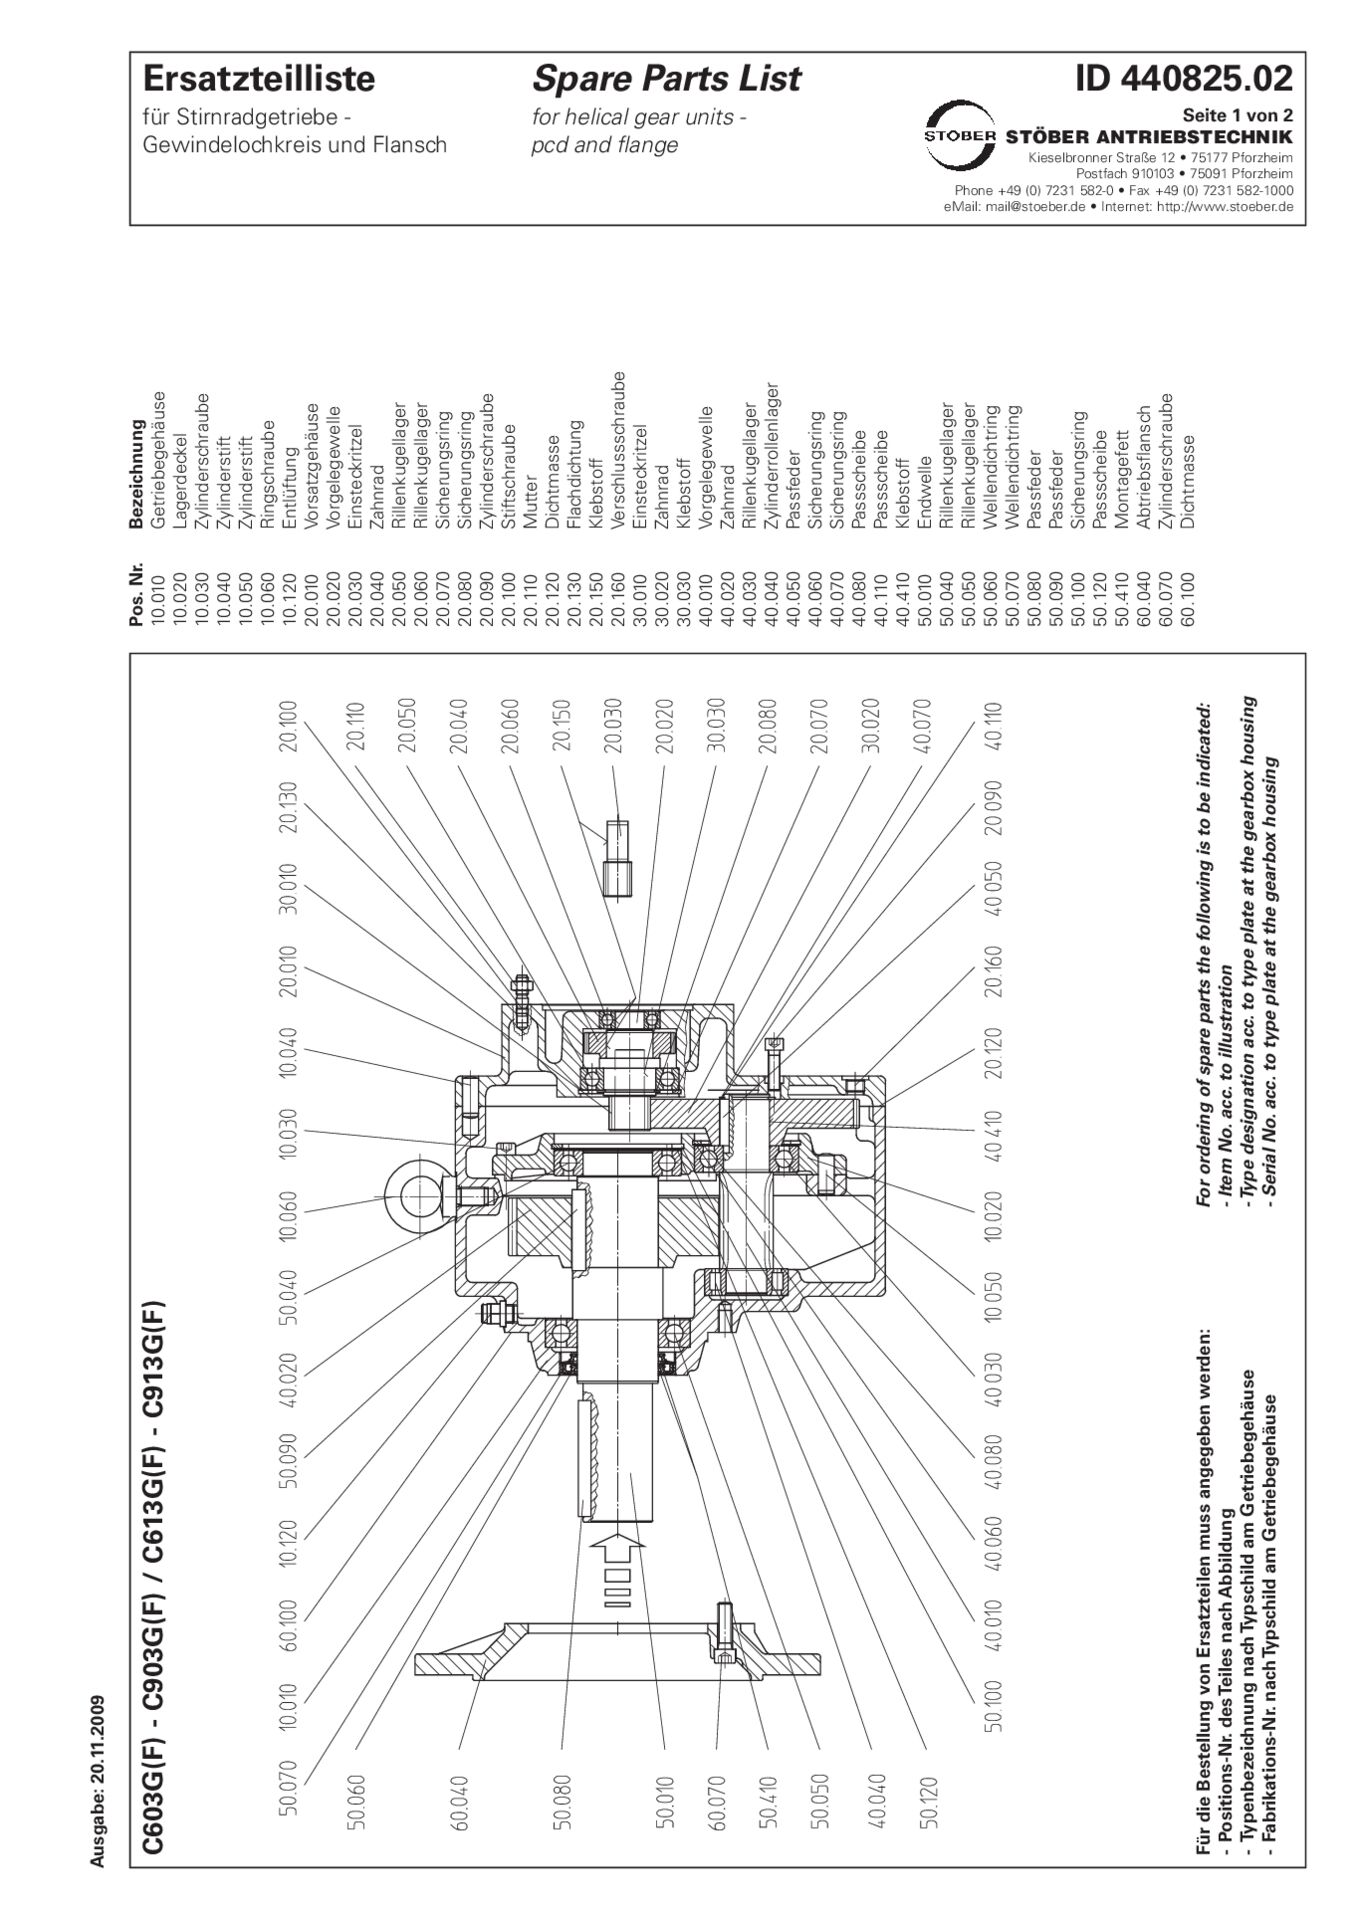 Replacement parts list helical gear units C603 C613 C703 C713 C803 C813 C903 C913 G FErsatzteilliste Stirnradgetriebe C603 C613 C703 C713 C803 C813 C903 C913 G F